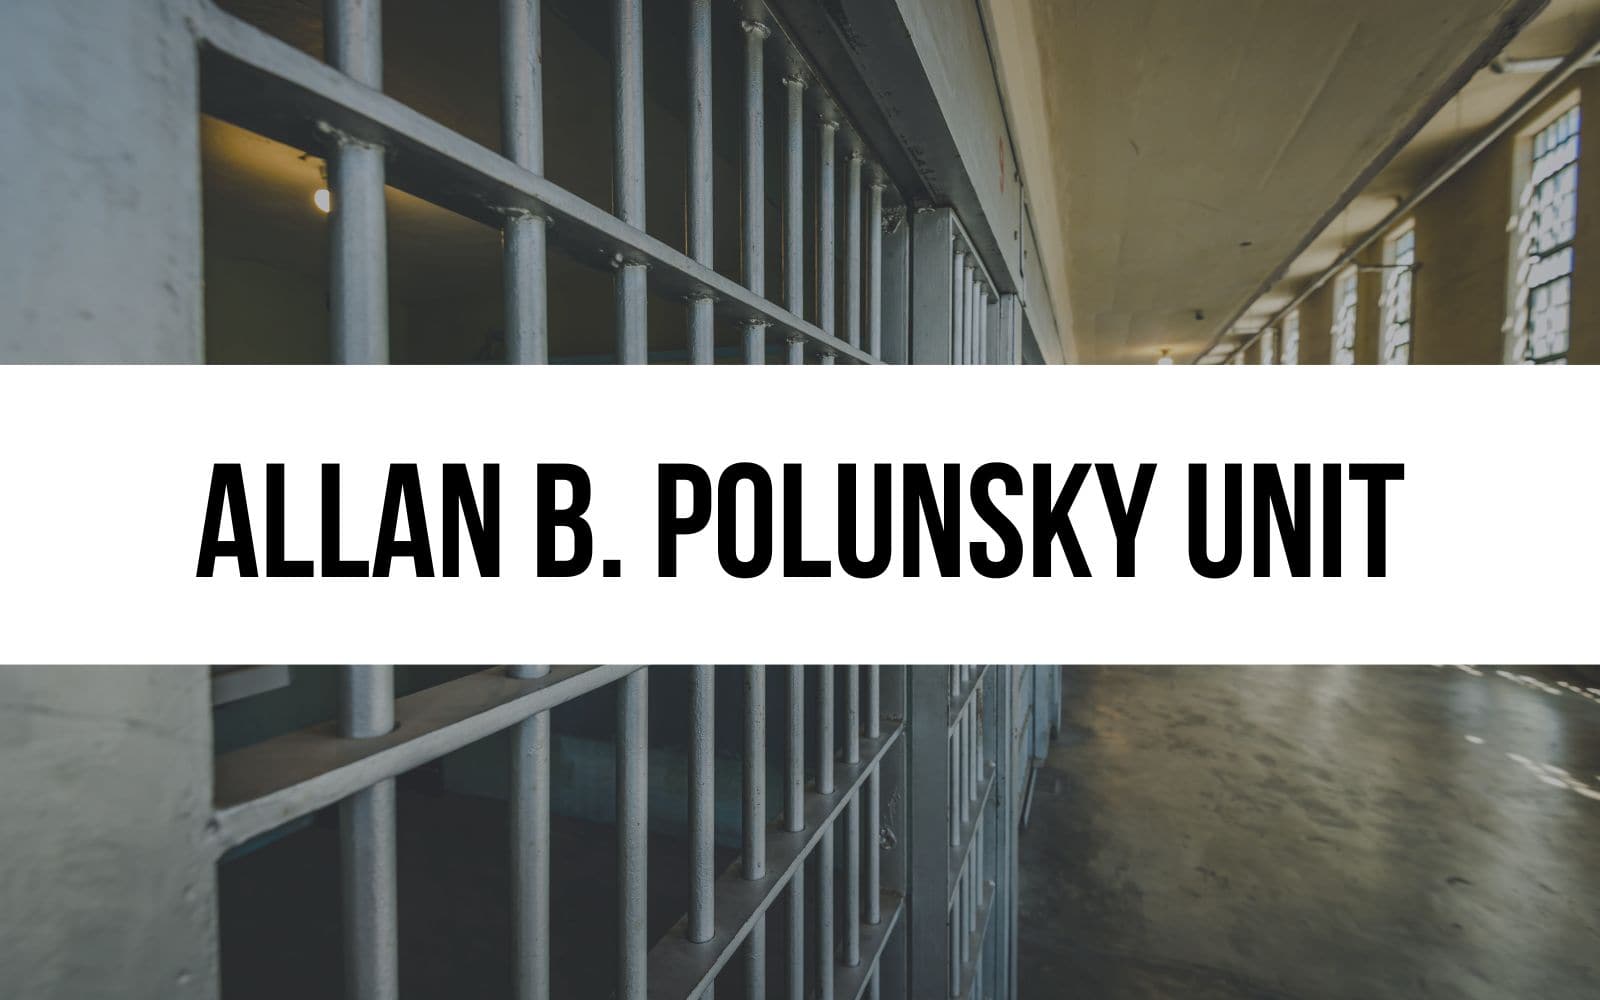 Allan B. Polunsky Unit